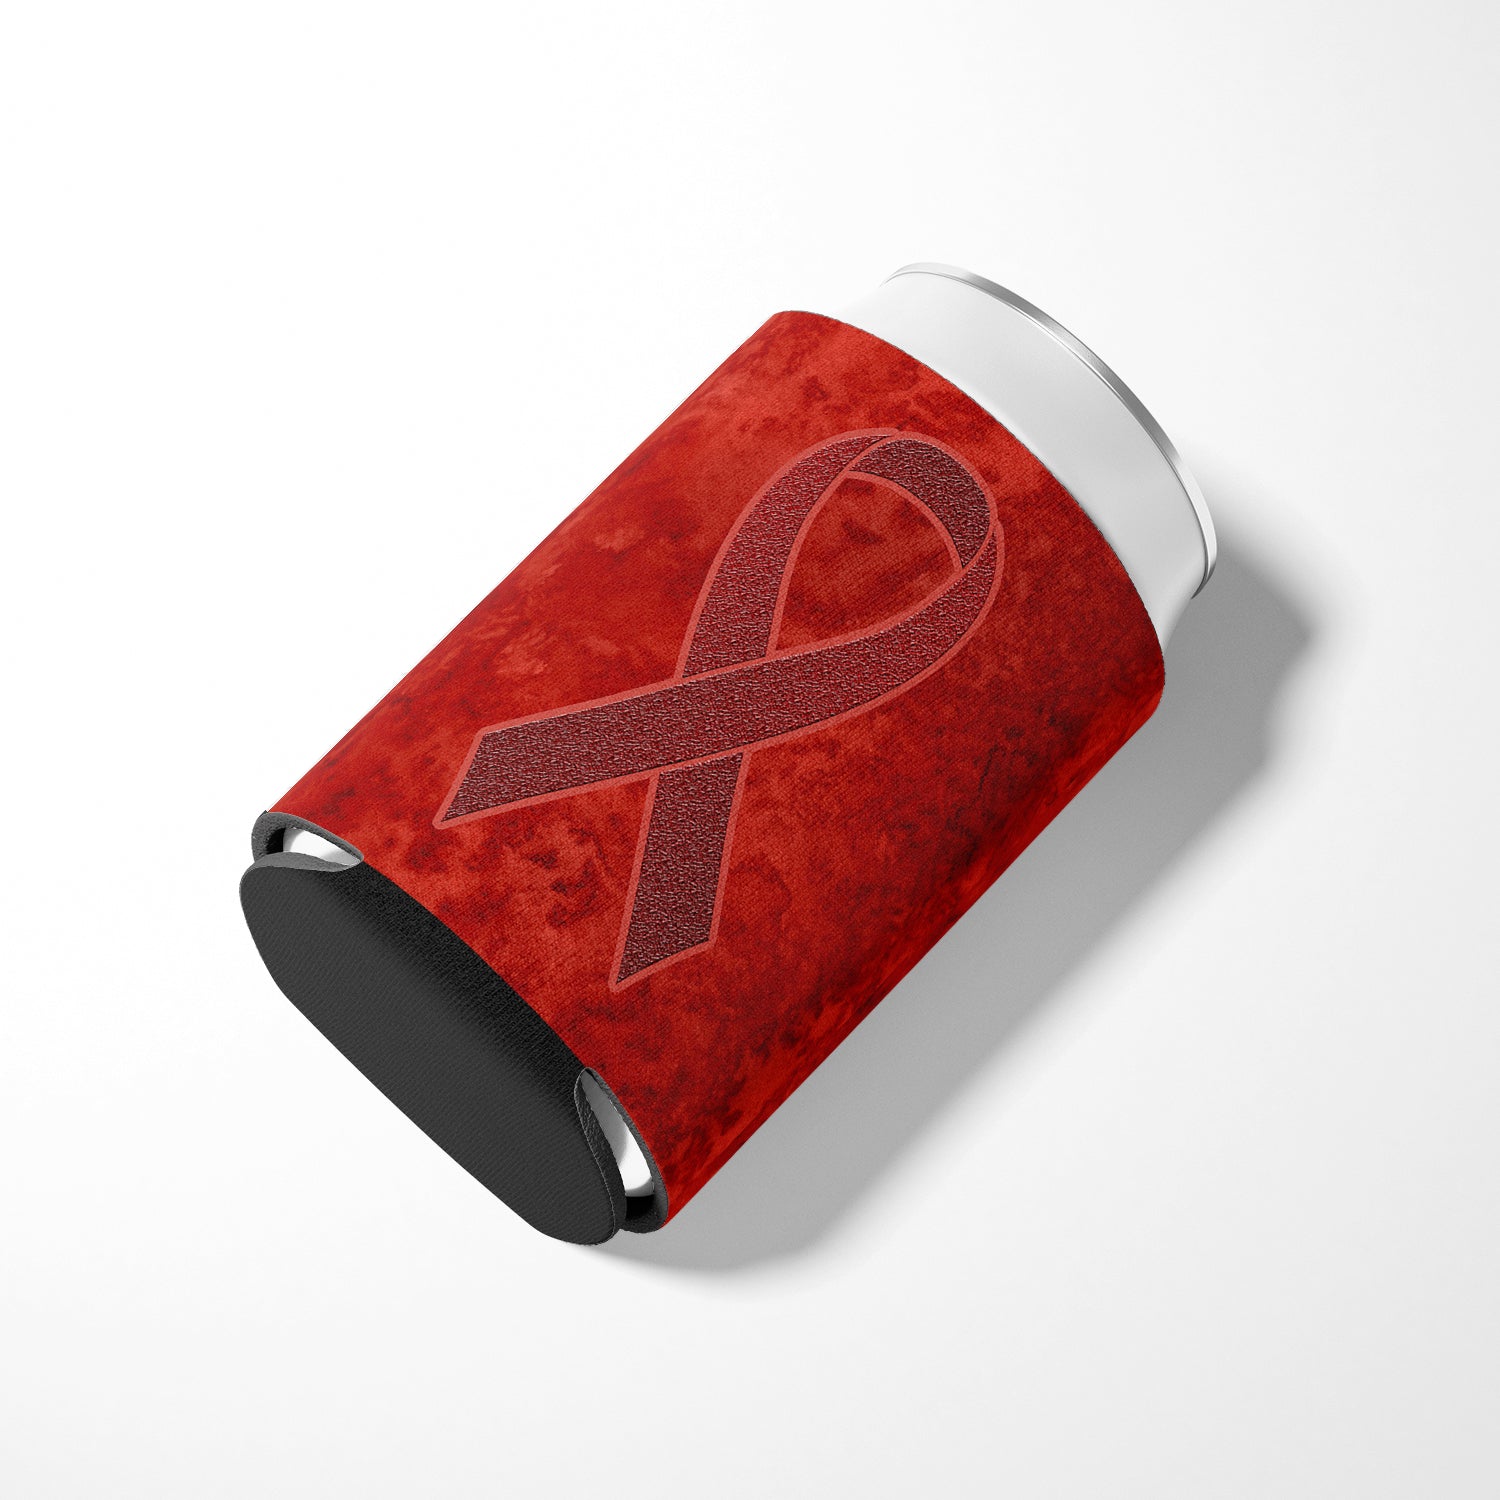 Burgundy Ribbon for Multiple Myeloma Cancer Awareness Can or Bottle Hugger AN1214CC.